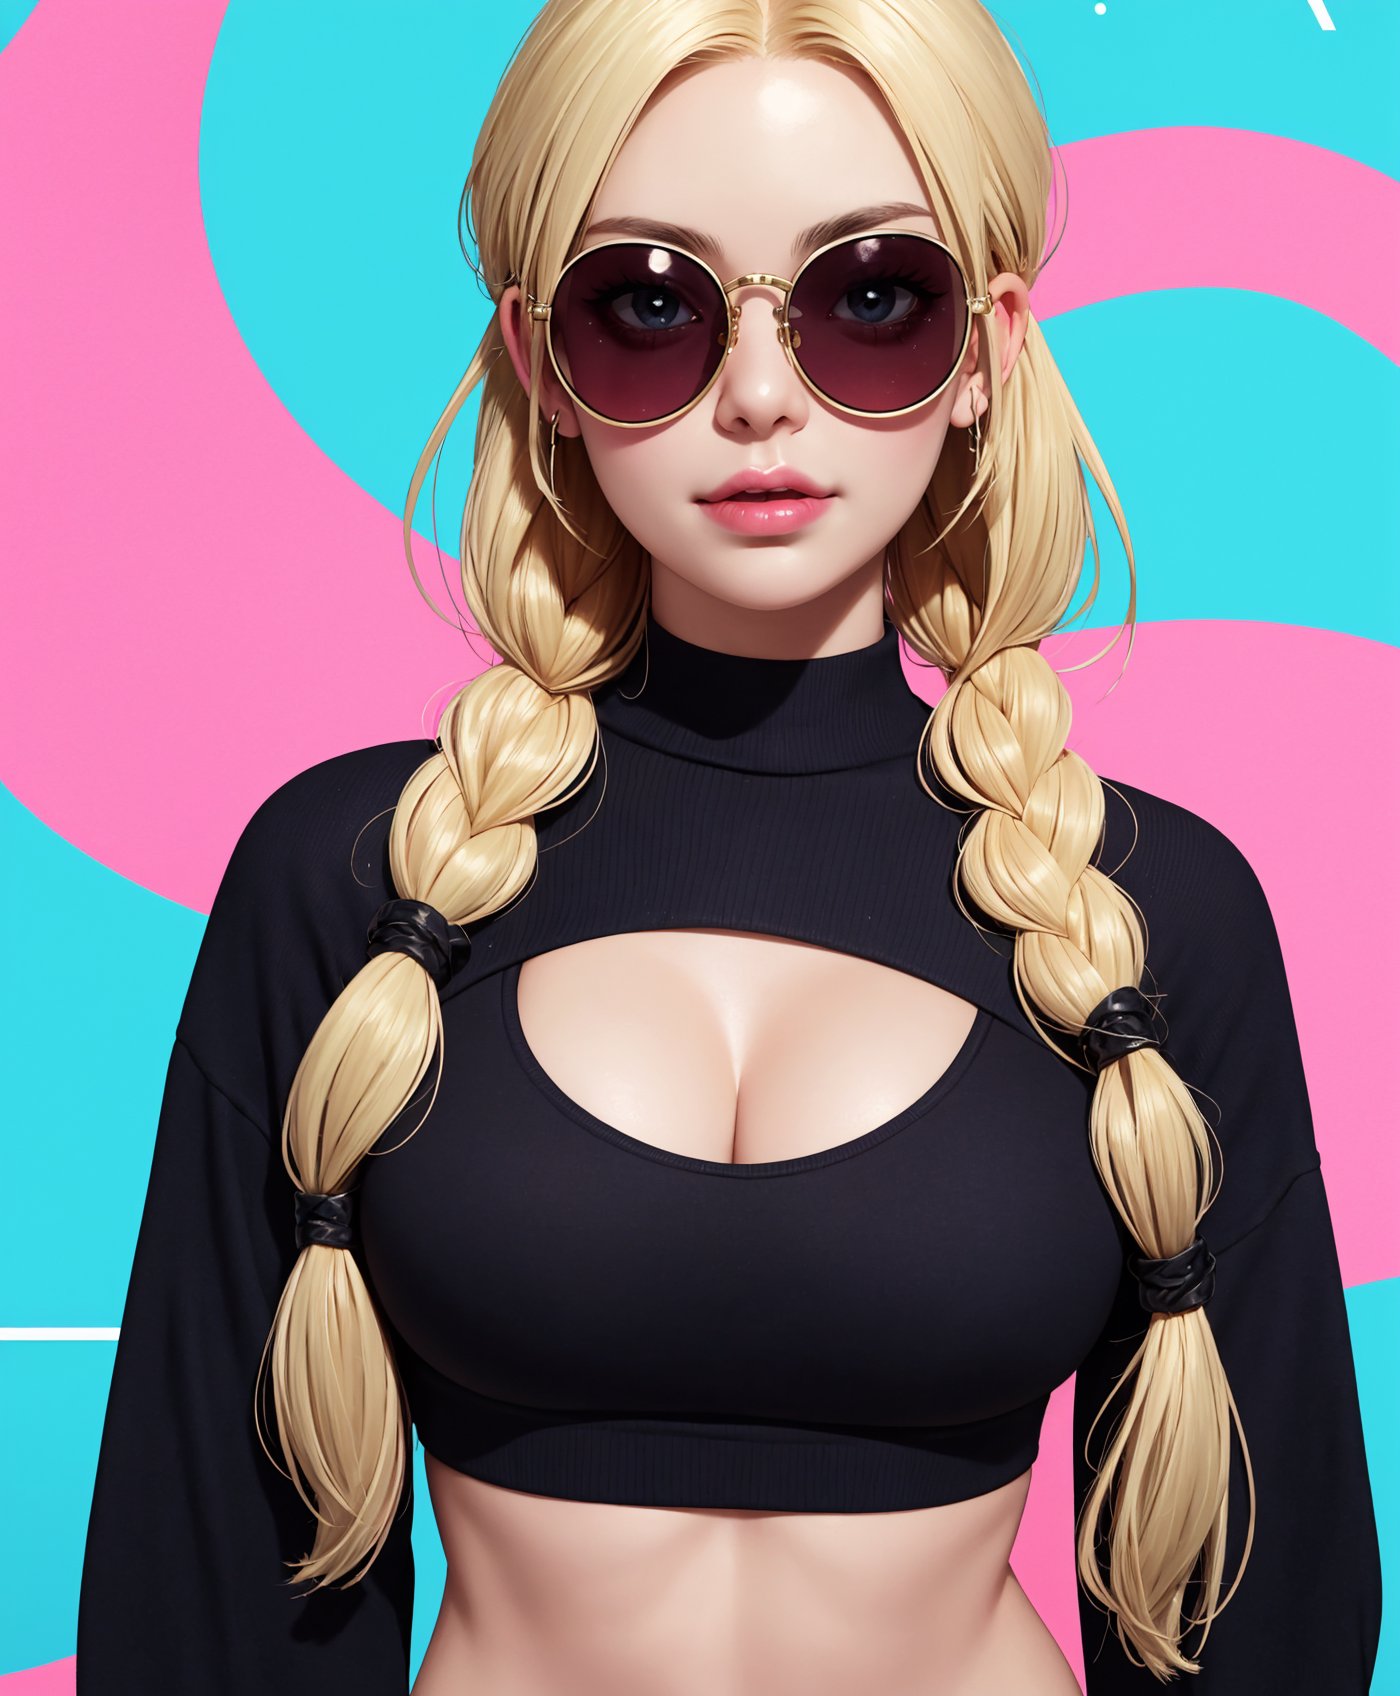 portrait,beautiful 22 year old hippie,blonde hair in braids,sunglasses,playful,tiedie long sleeved crop top,cleavage,colorful background